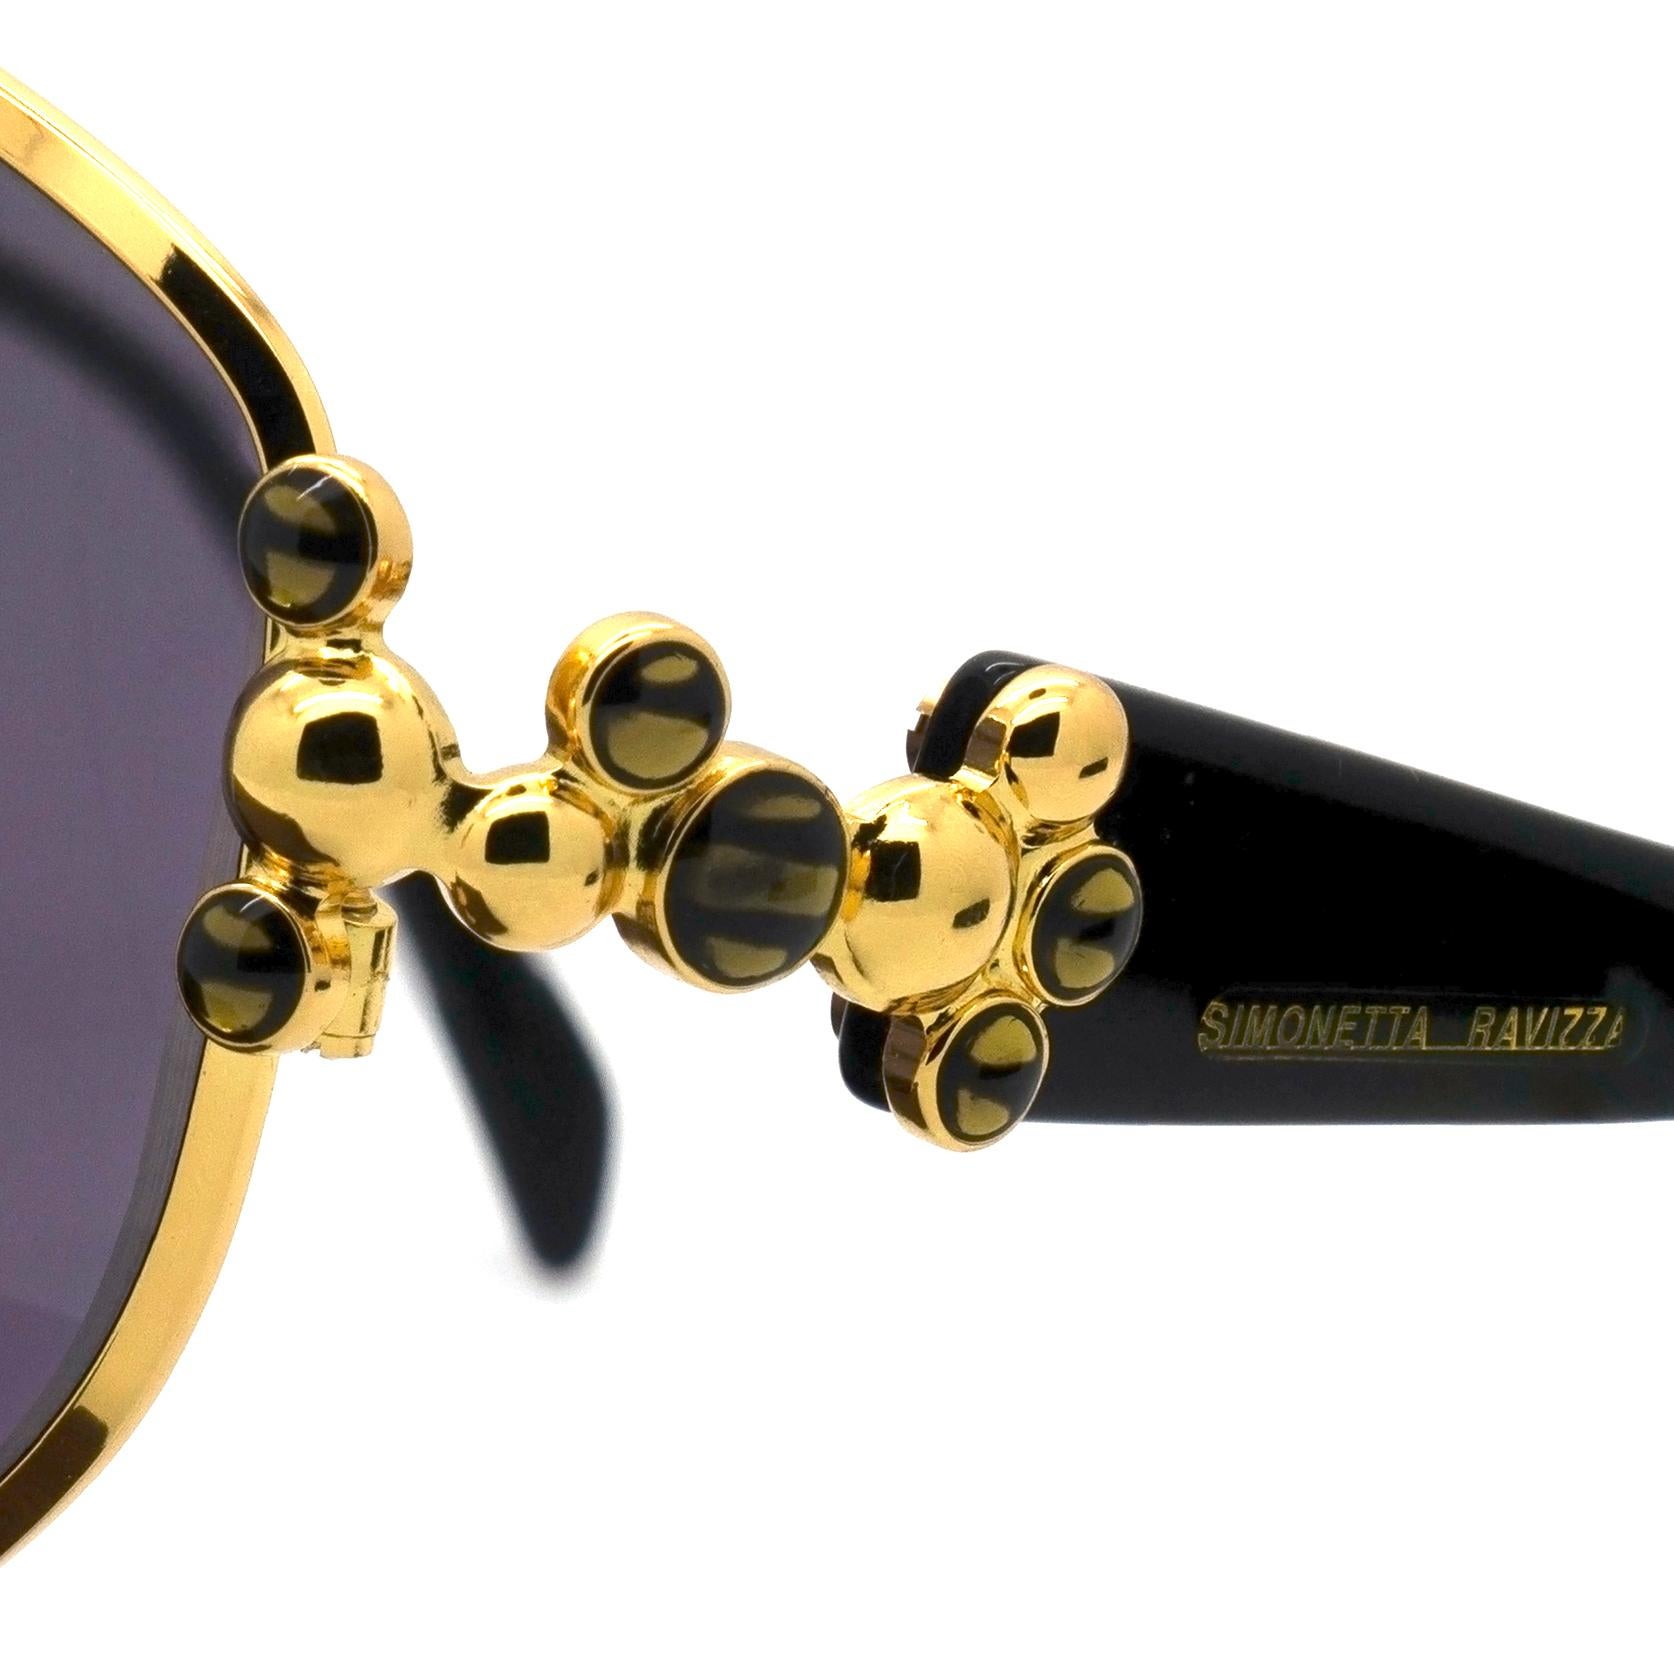 Gray Simonetta Ravizza vintage sunglasses for women 1980s